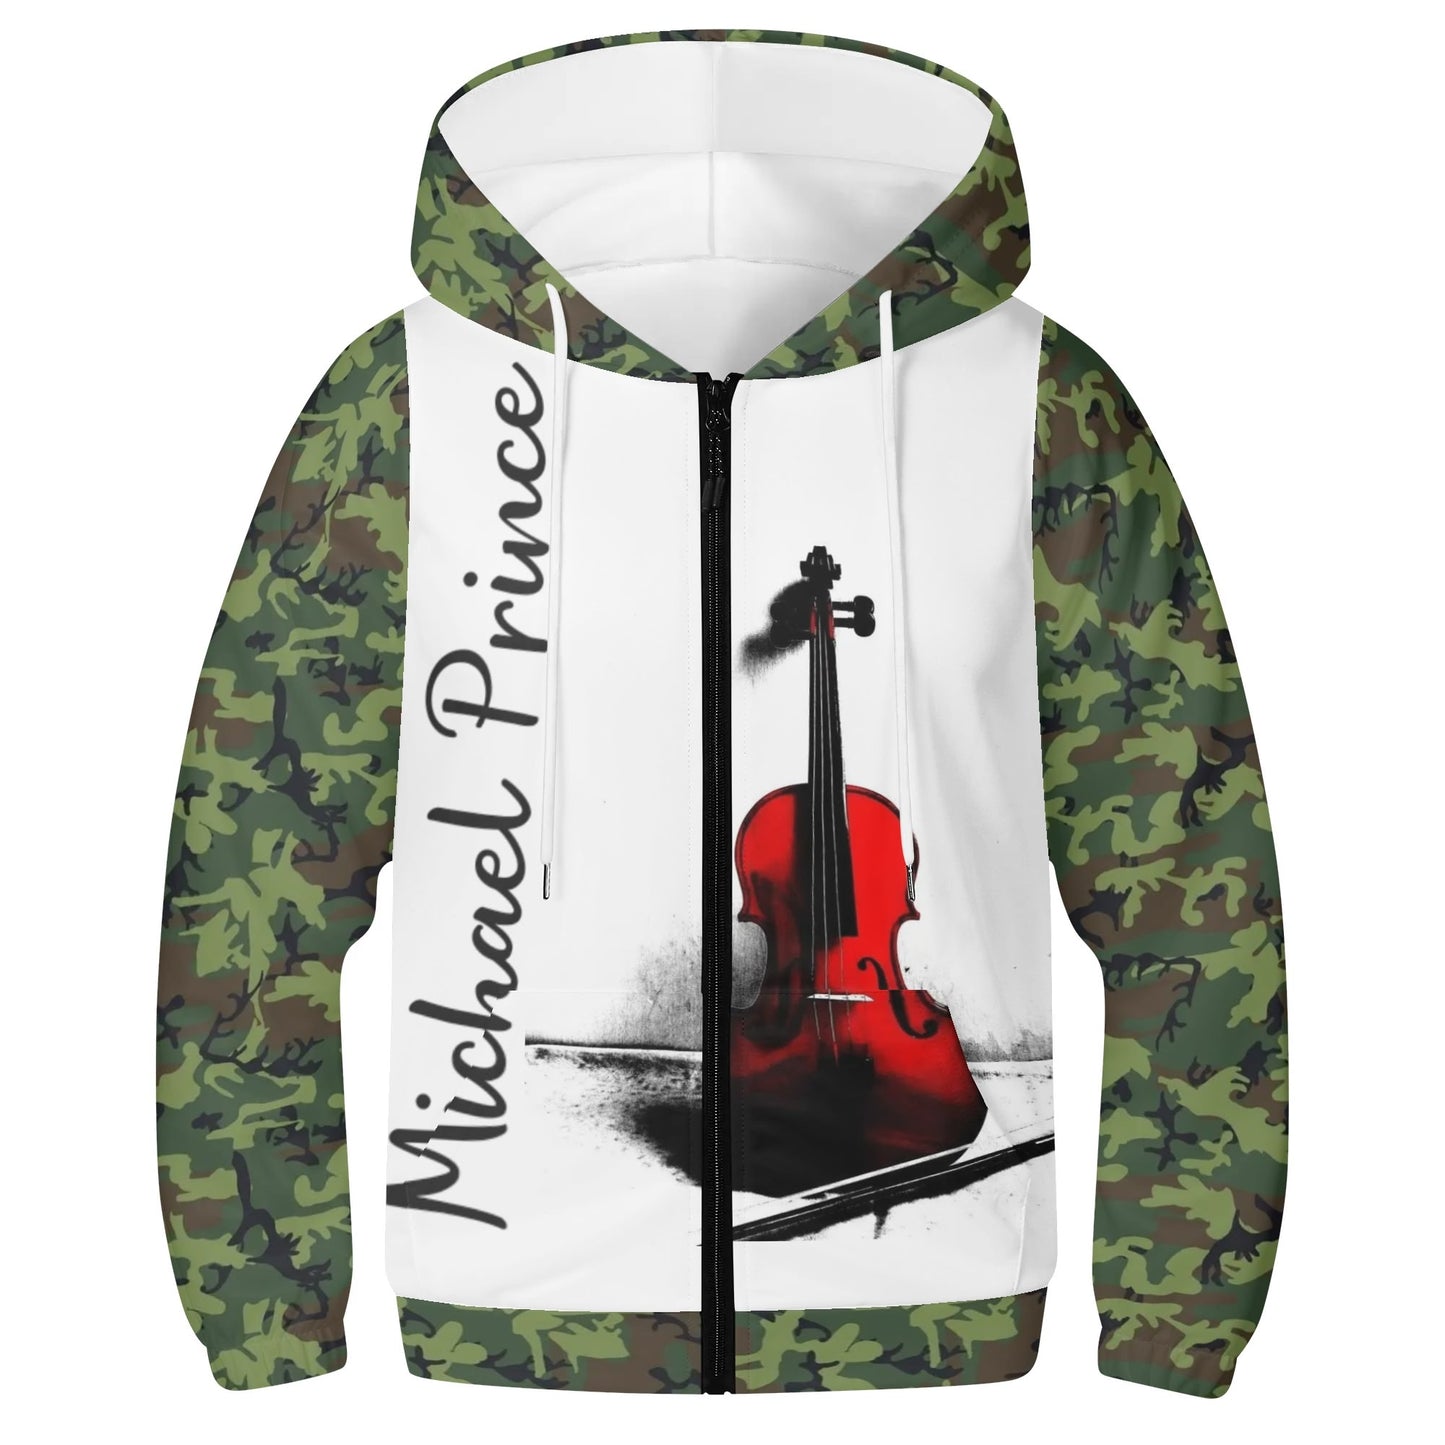 MPV Youth Lightweight Zipper Jumper Sweatshirt Hoodie